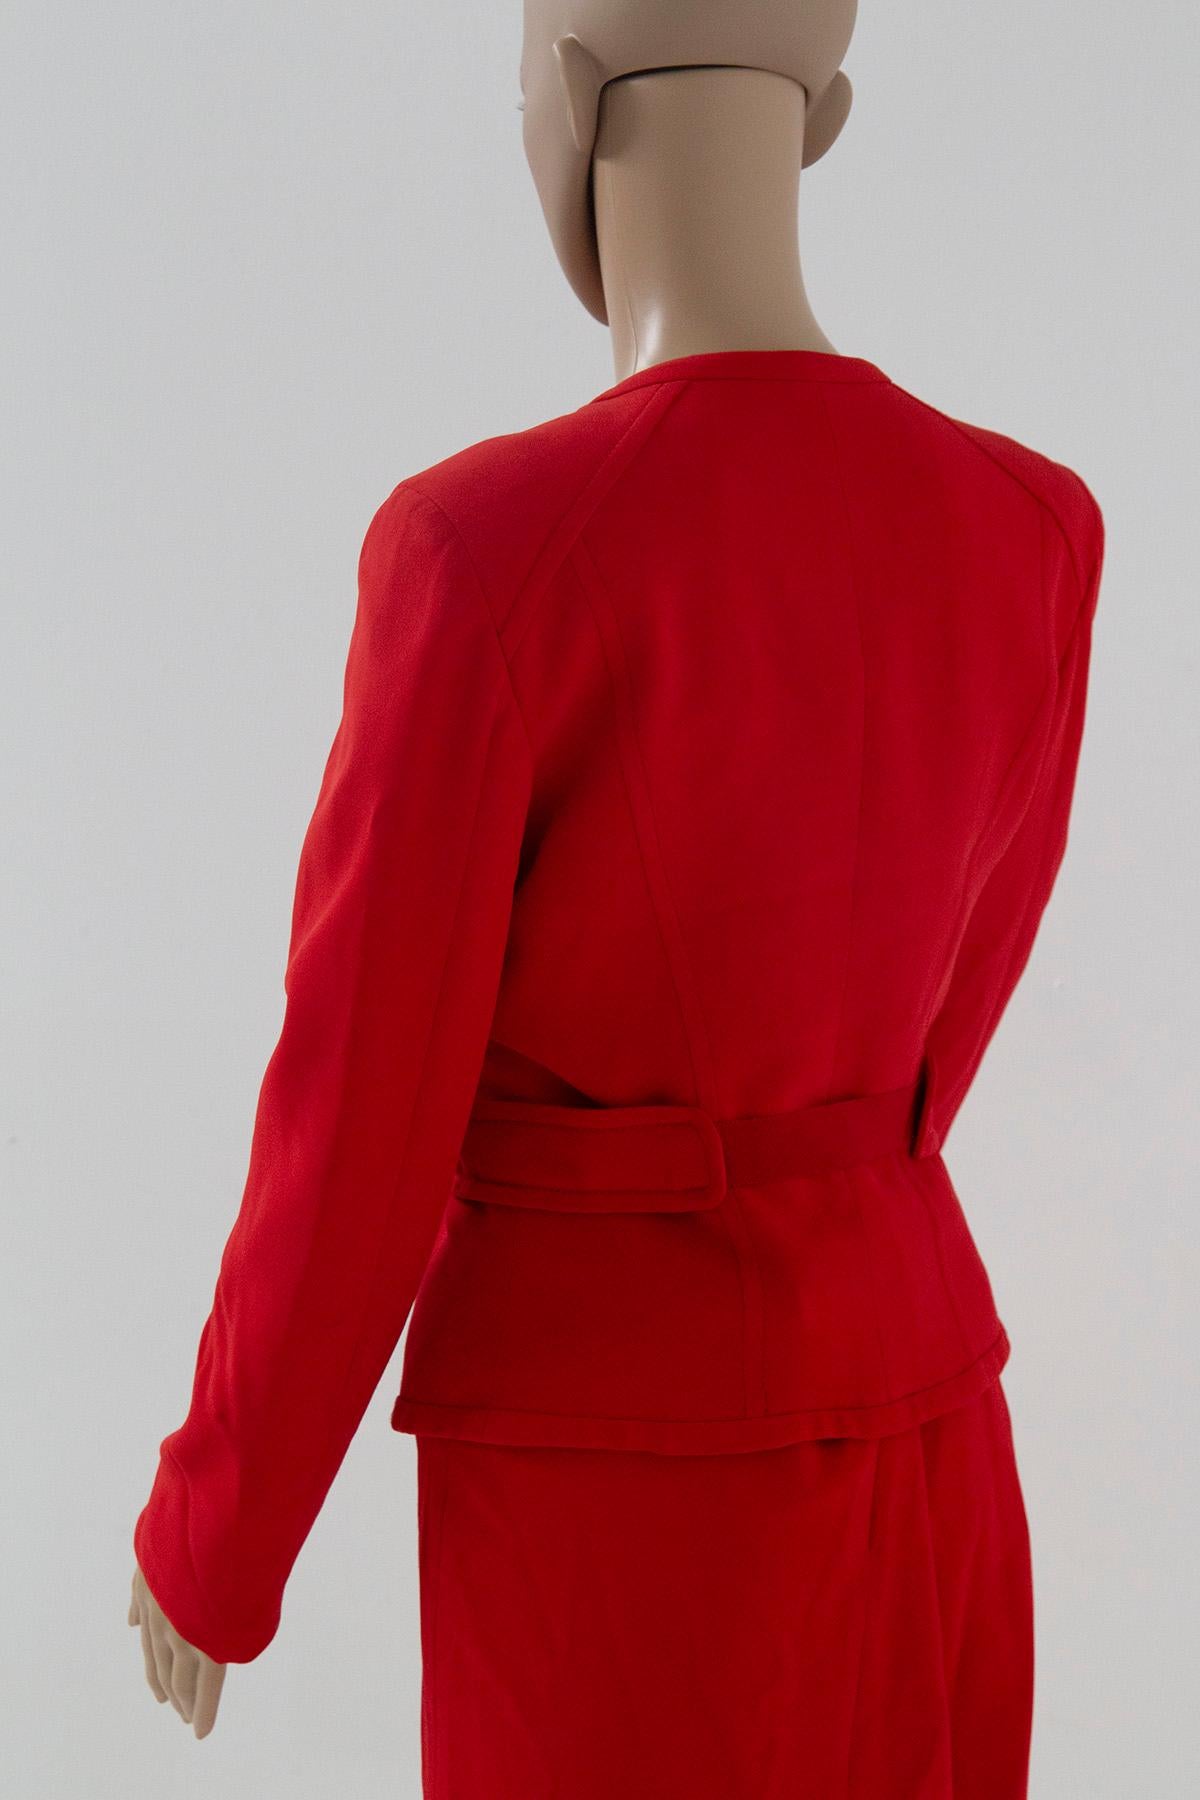 Valentino Garavani Red suit Sheath Dresses 1990 For Sale 4